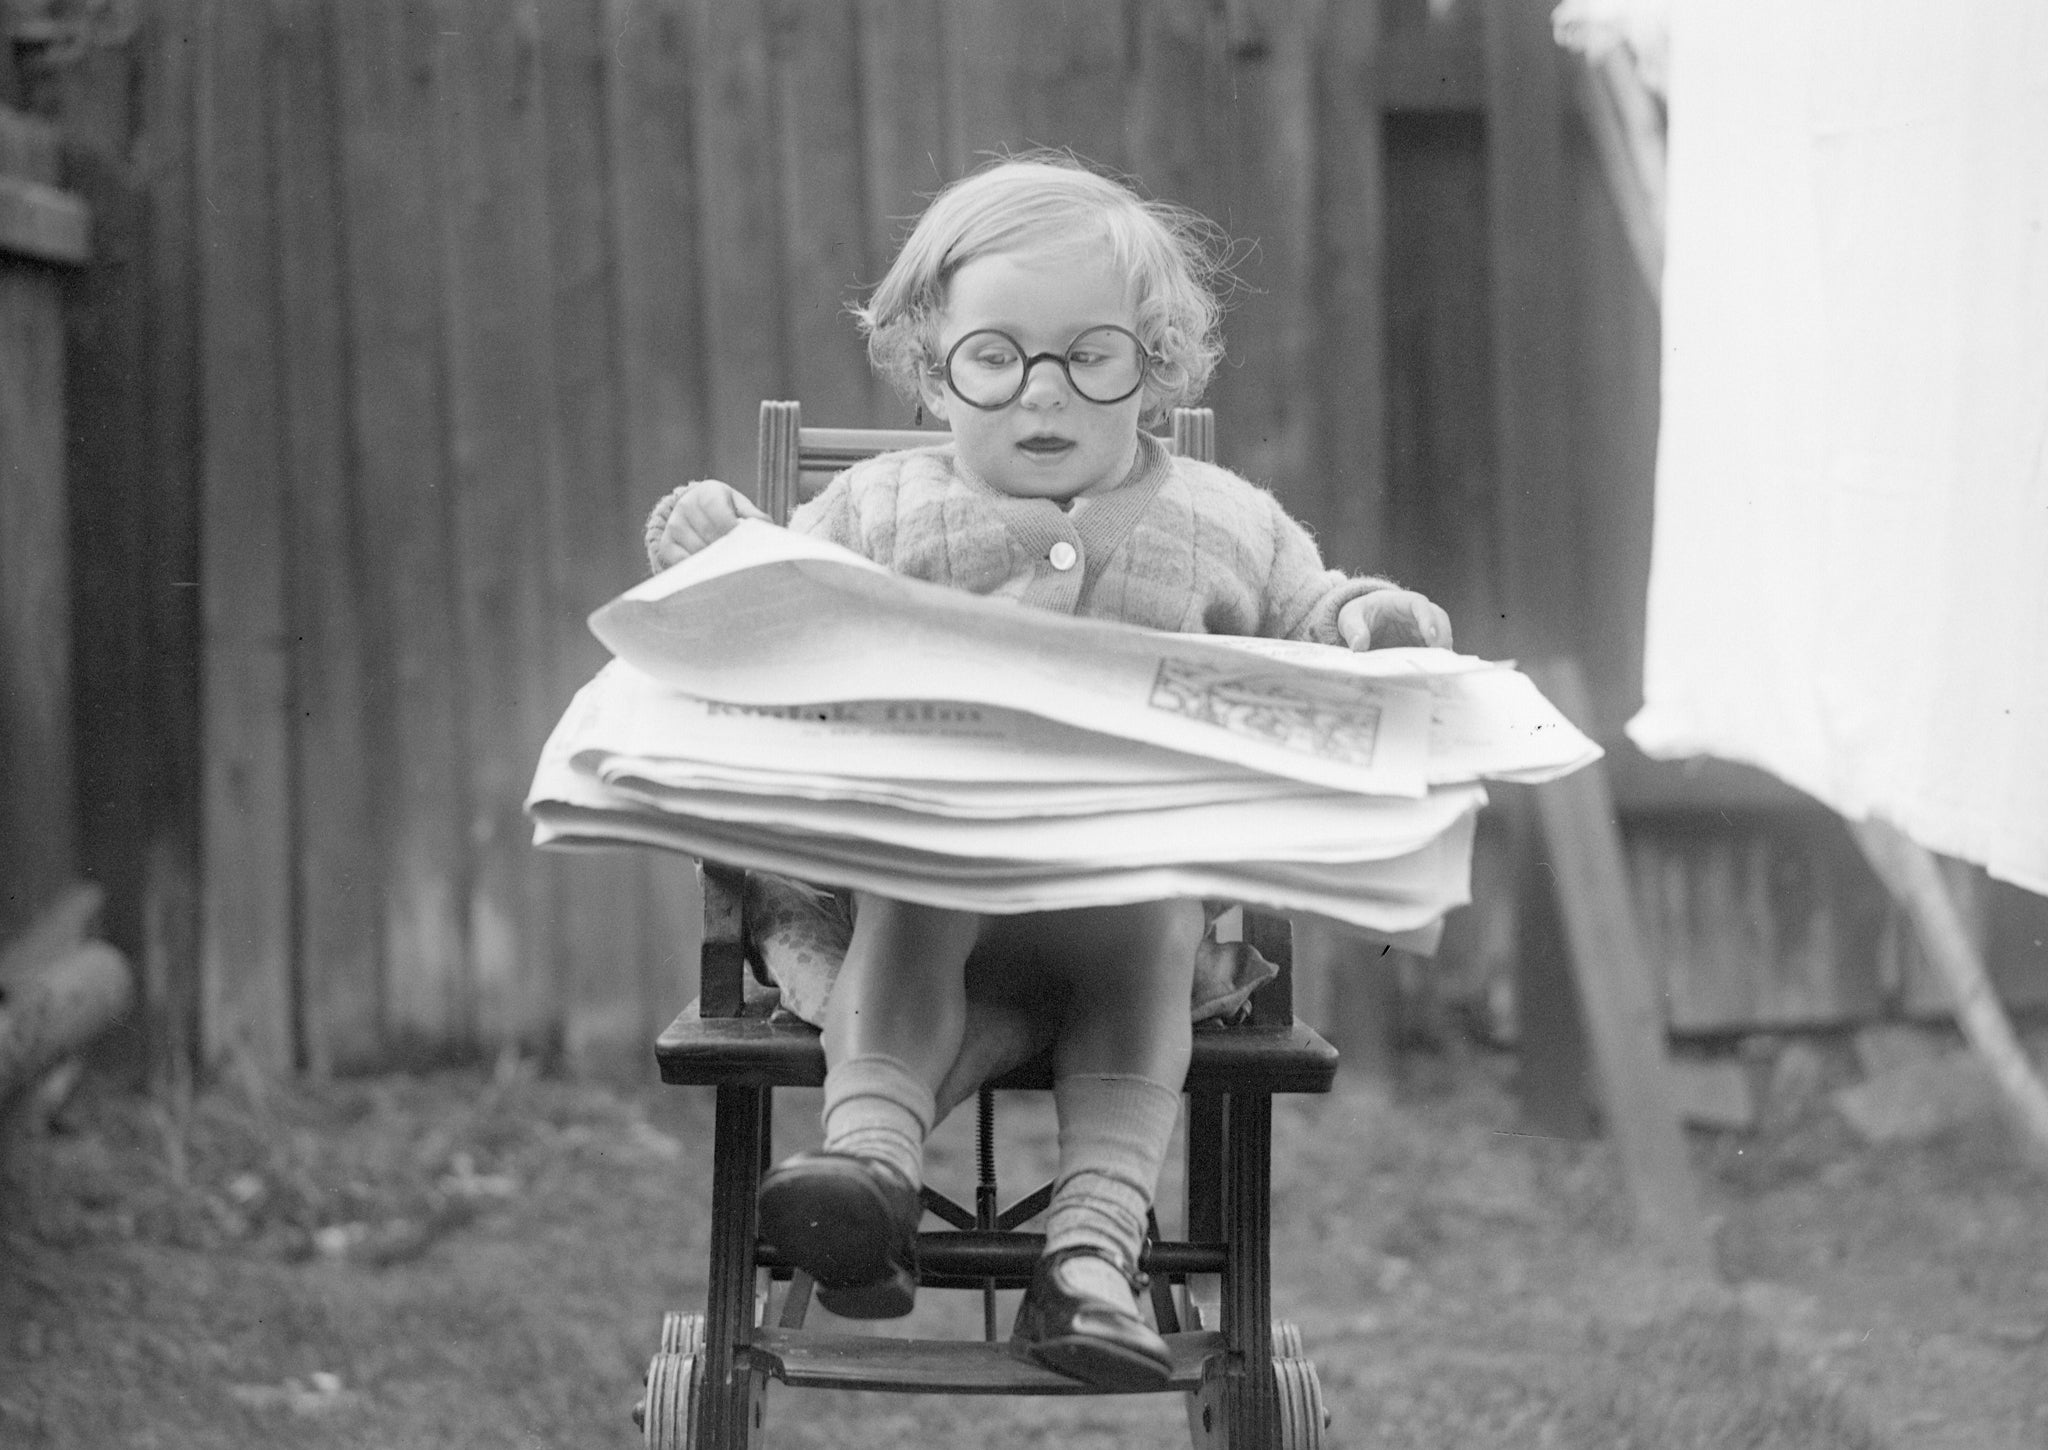 A smart baby reads a newspaper